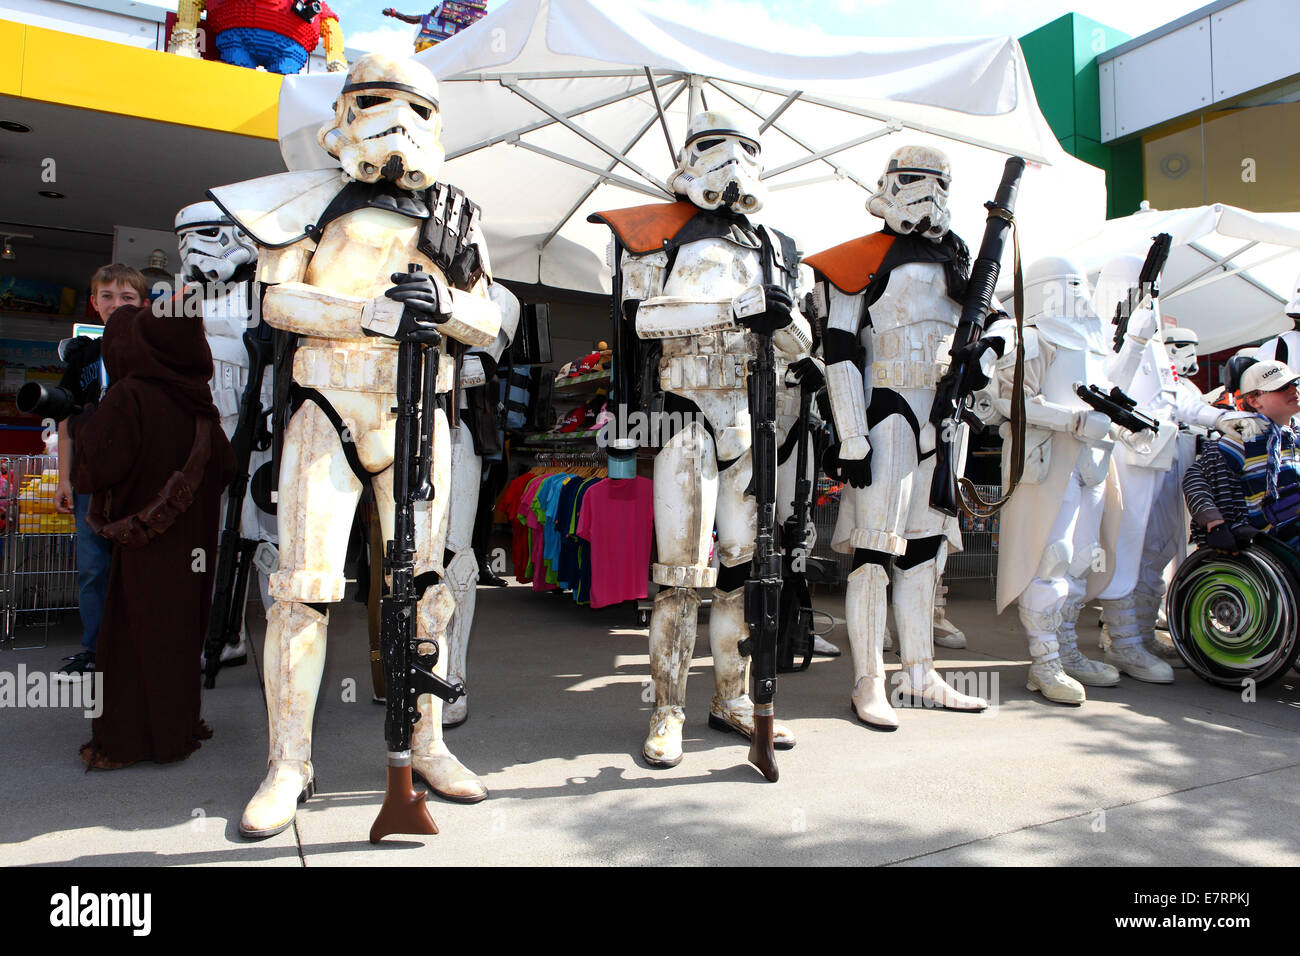 Star Wars Stormtroopers de la 501ème Légion, garnison allemande, Legoland Allemagne, 6 juin 2011. Banque D'Images